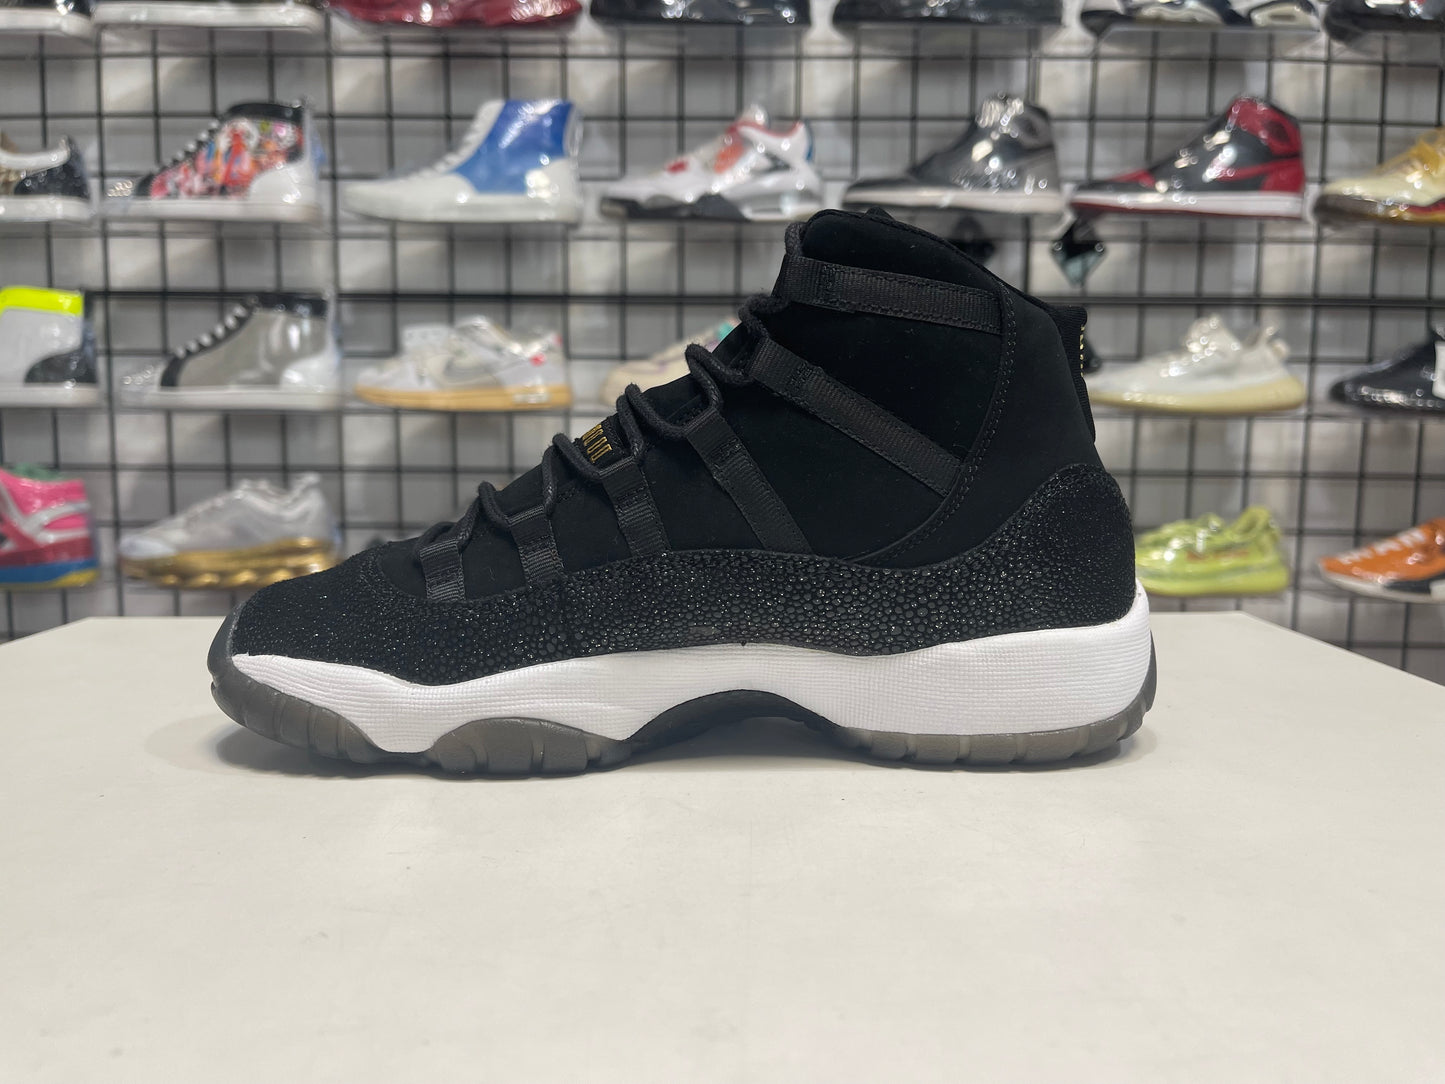 Brand New Jordan 11 Premium Heiress size 6